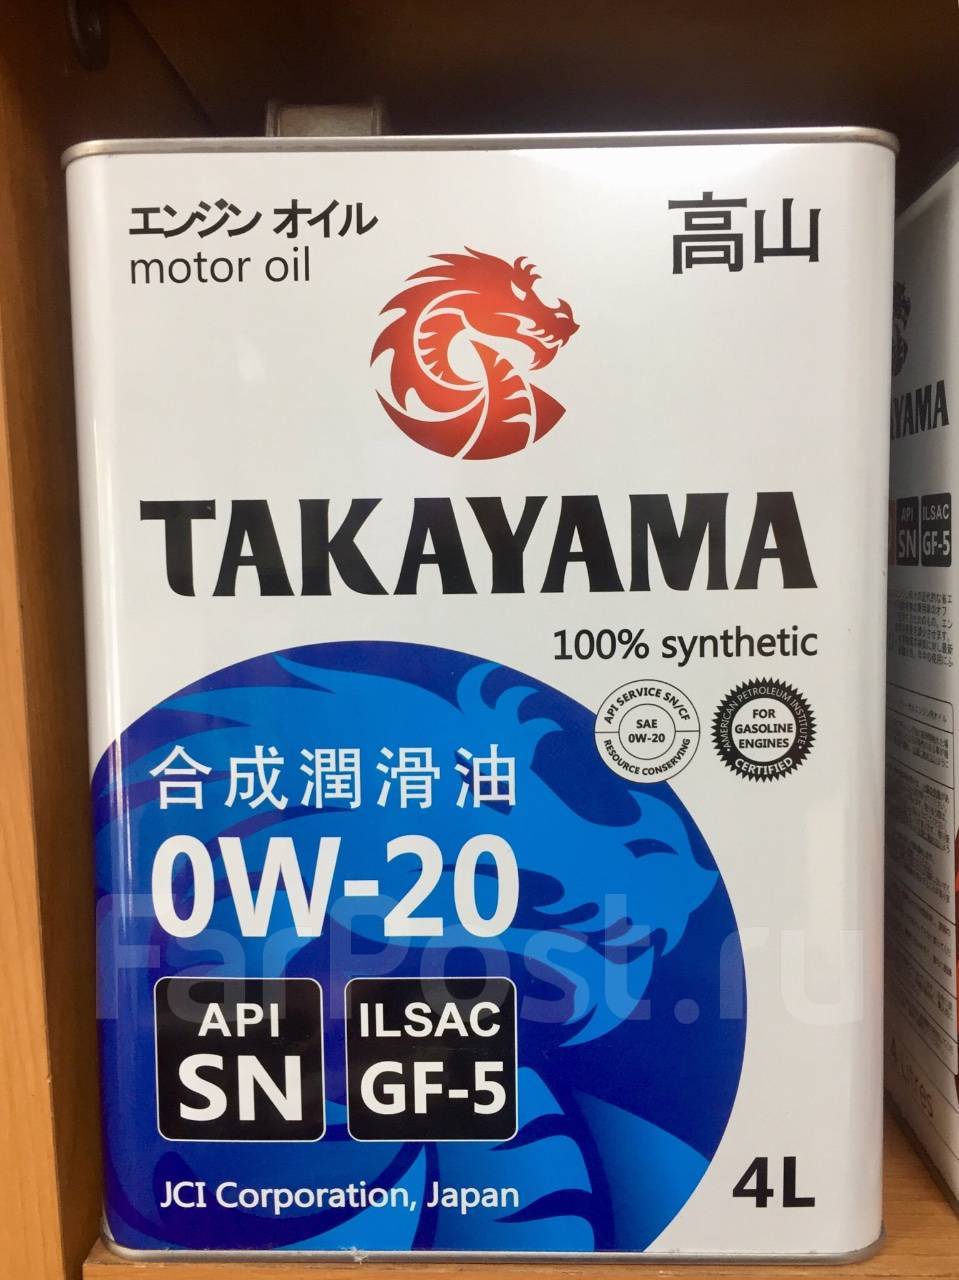 Масло gf 5 0w20. Моторное масло 0w20 Takayama. Такаяма 0w20 gf5. Takayama 0w-20 gf-5 API SN. Takayama 0w20 SN/gf-5 Takayama 1л синтетическое.